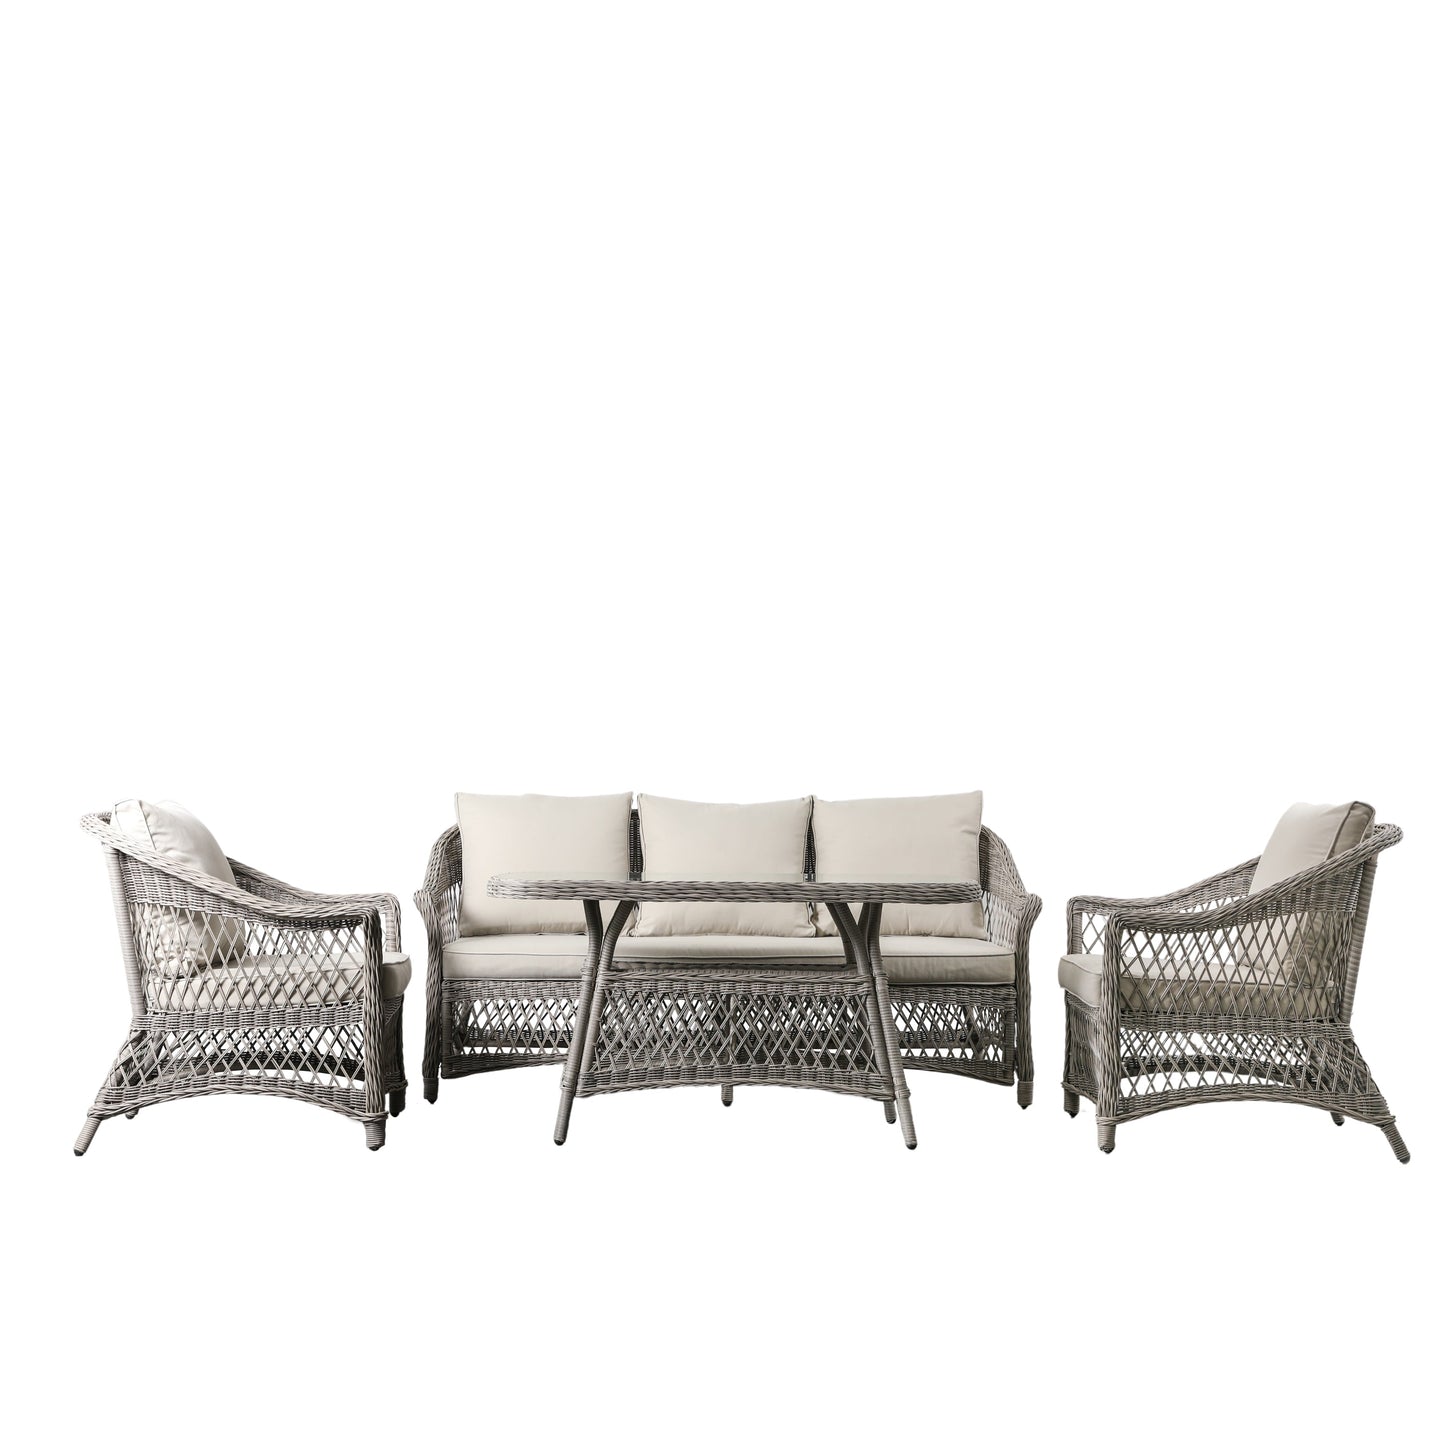 A Allington Country Sofa Dining/Tea Set Stone for interior decor on a white background.